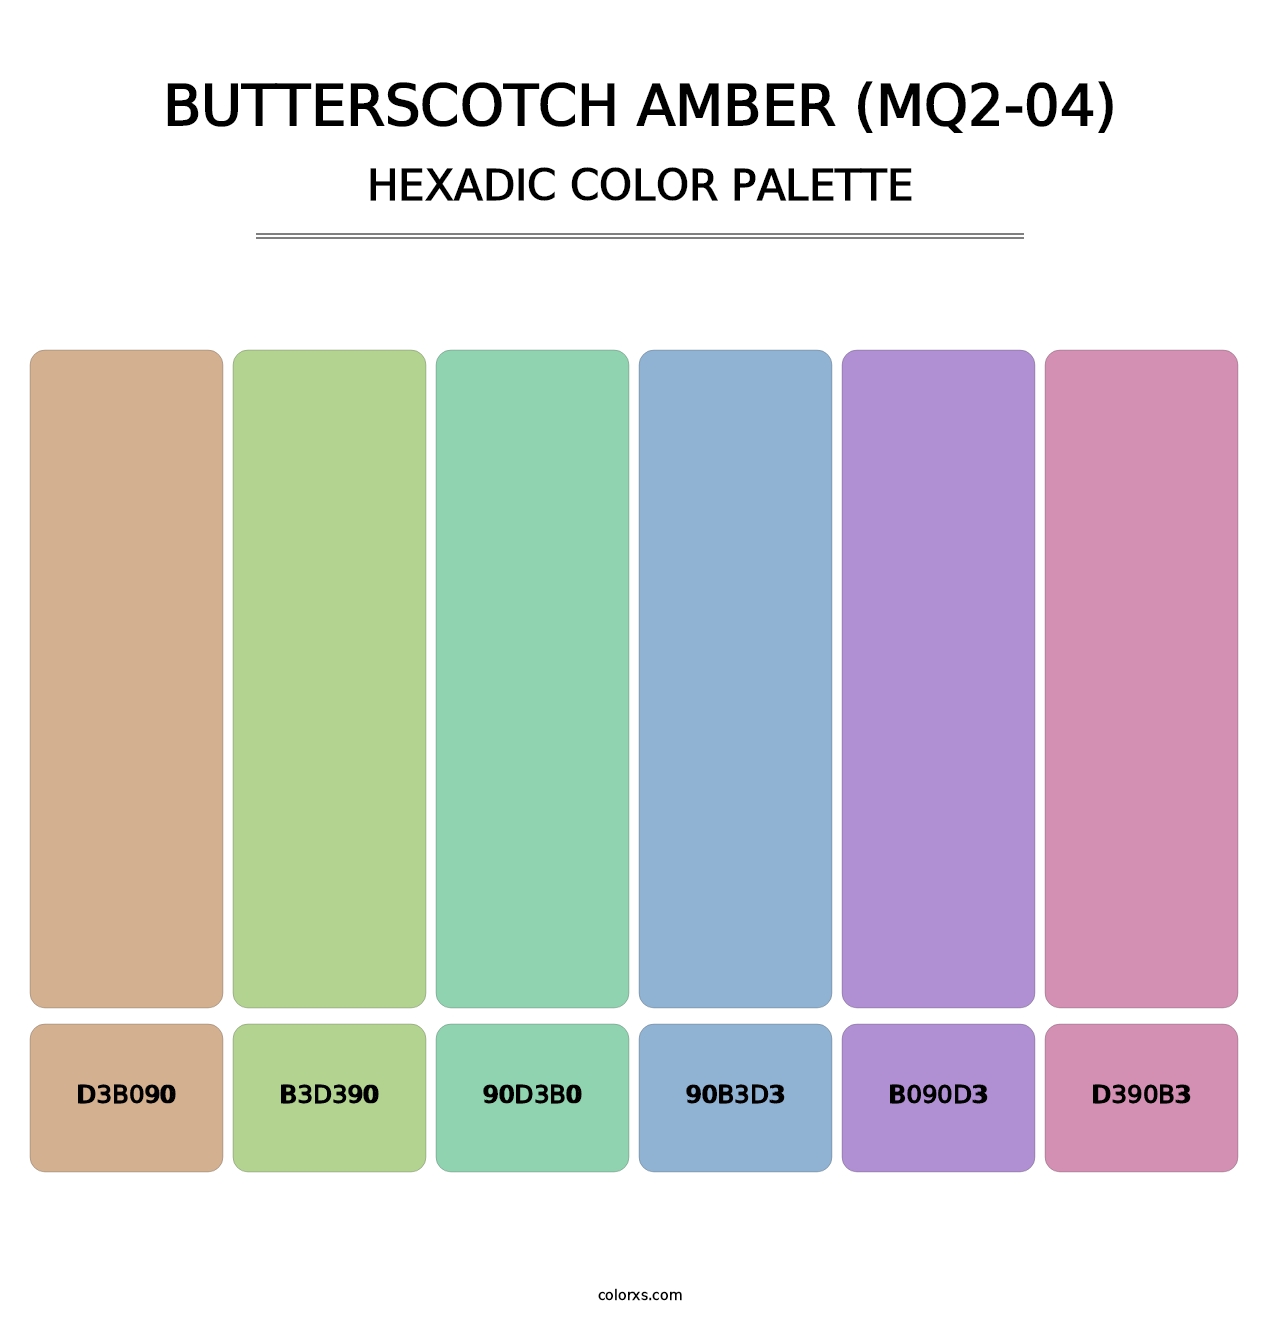 Butterscotch Amber (MQ2-04) - Hexadic Color Palette